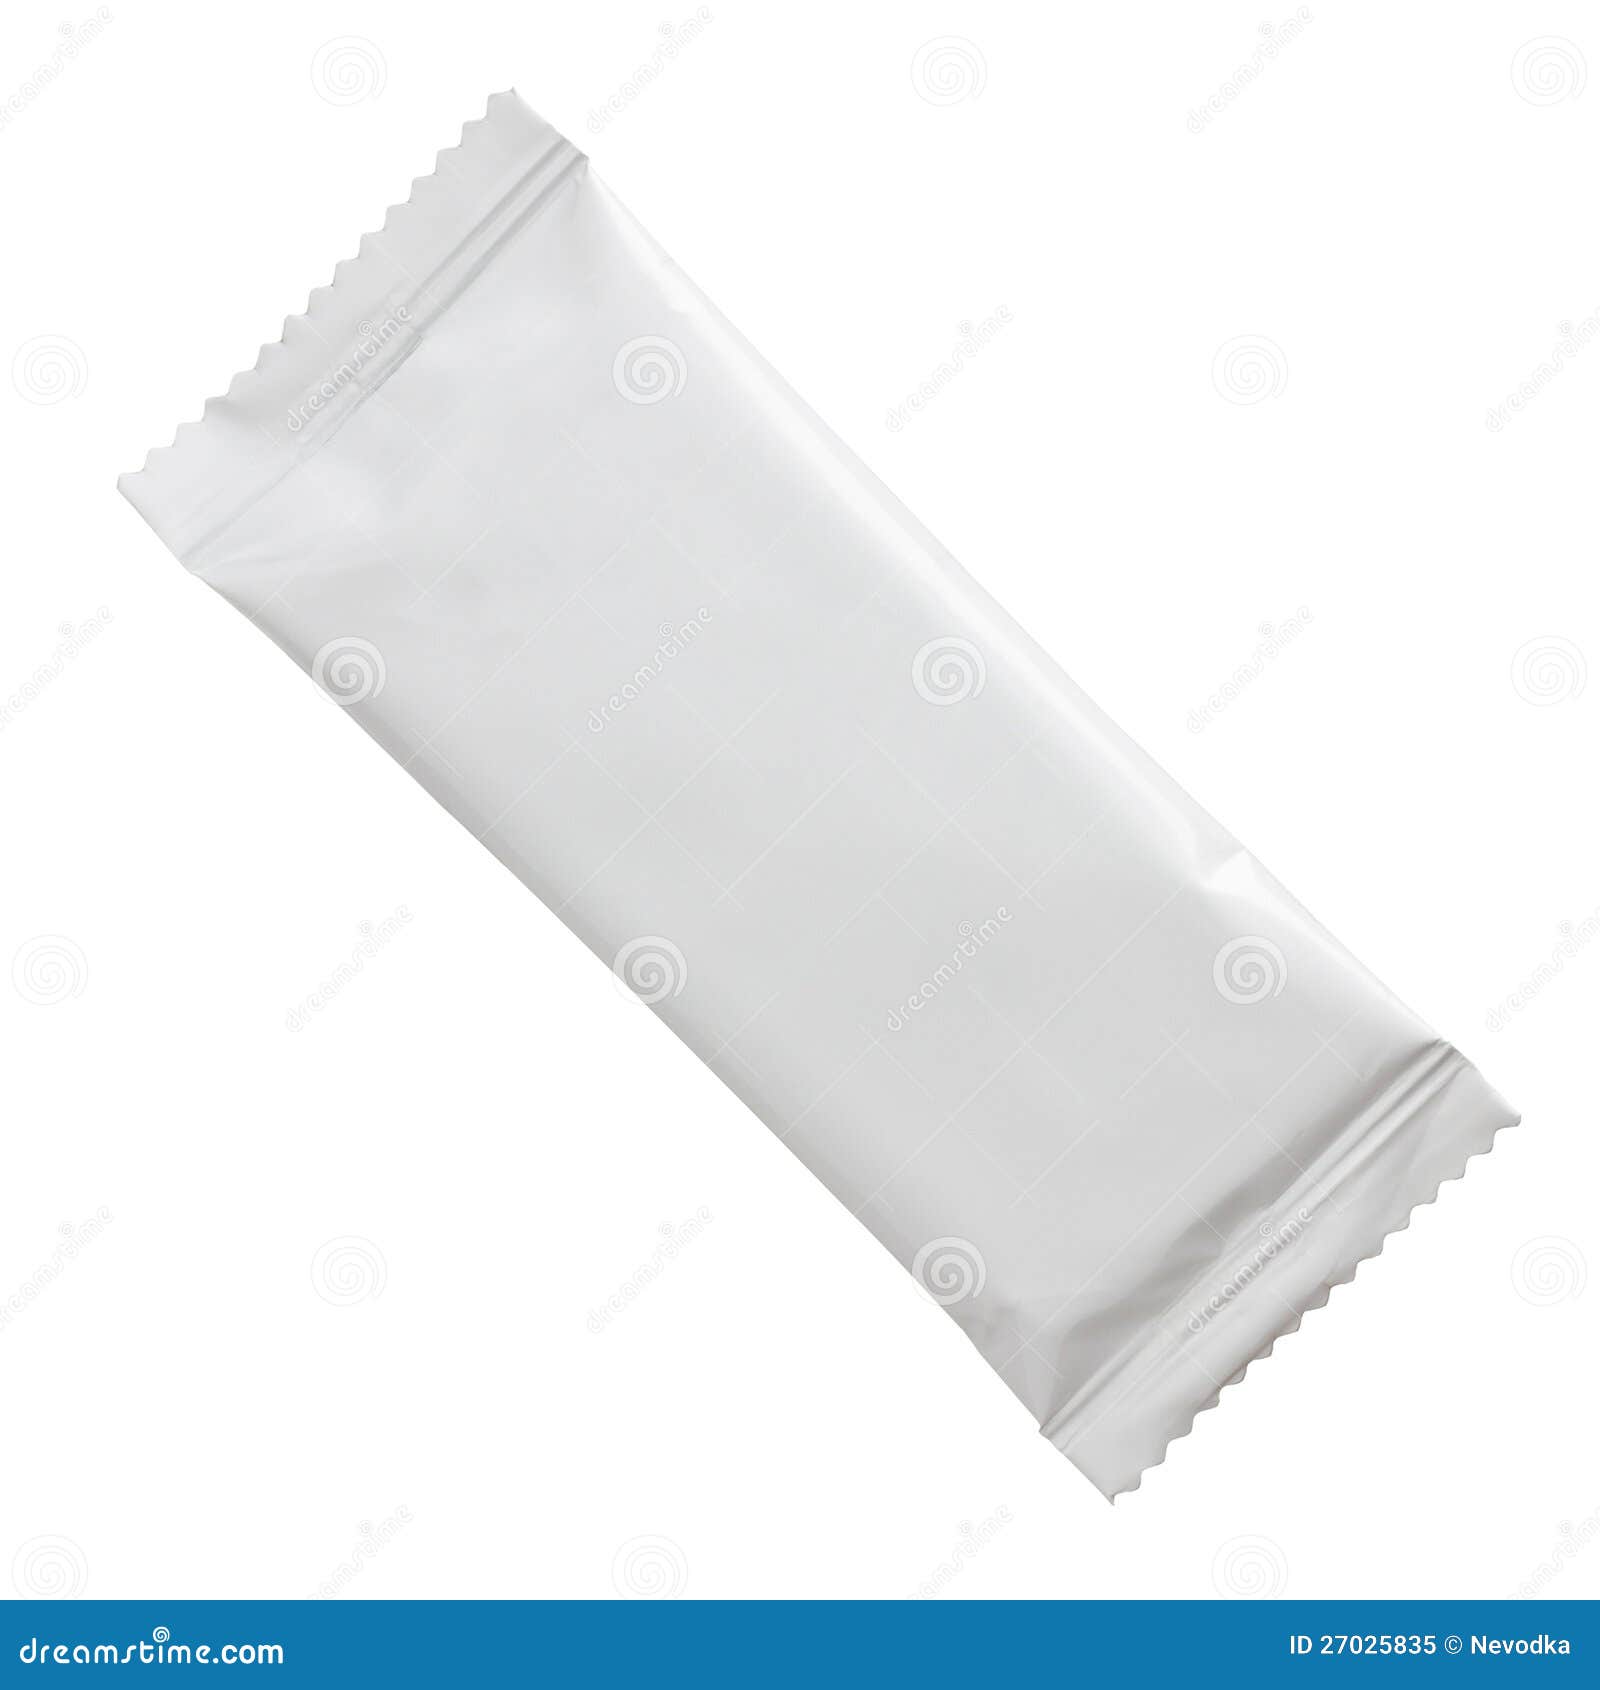 blank plastic stick packaging